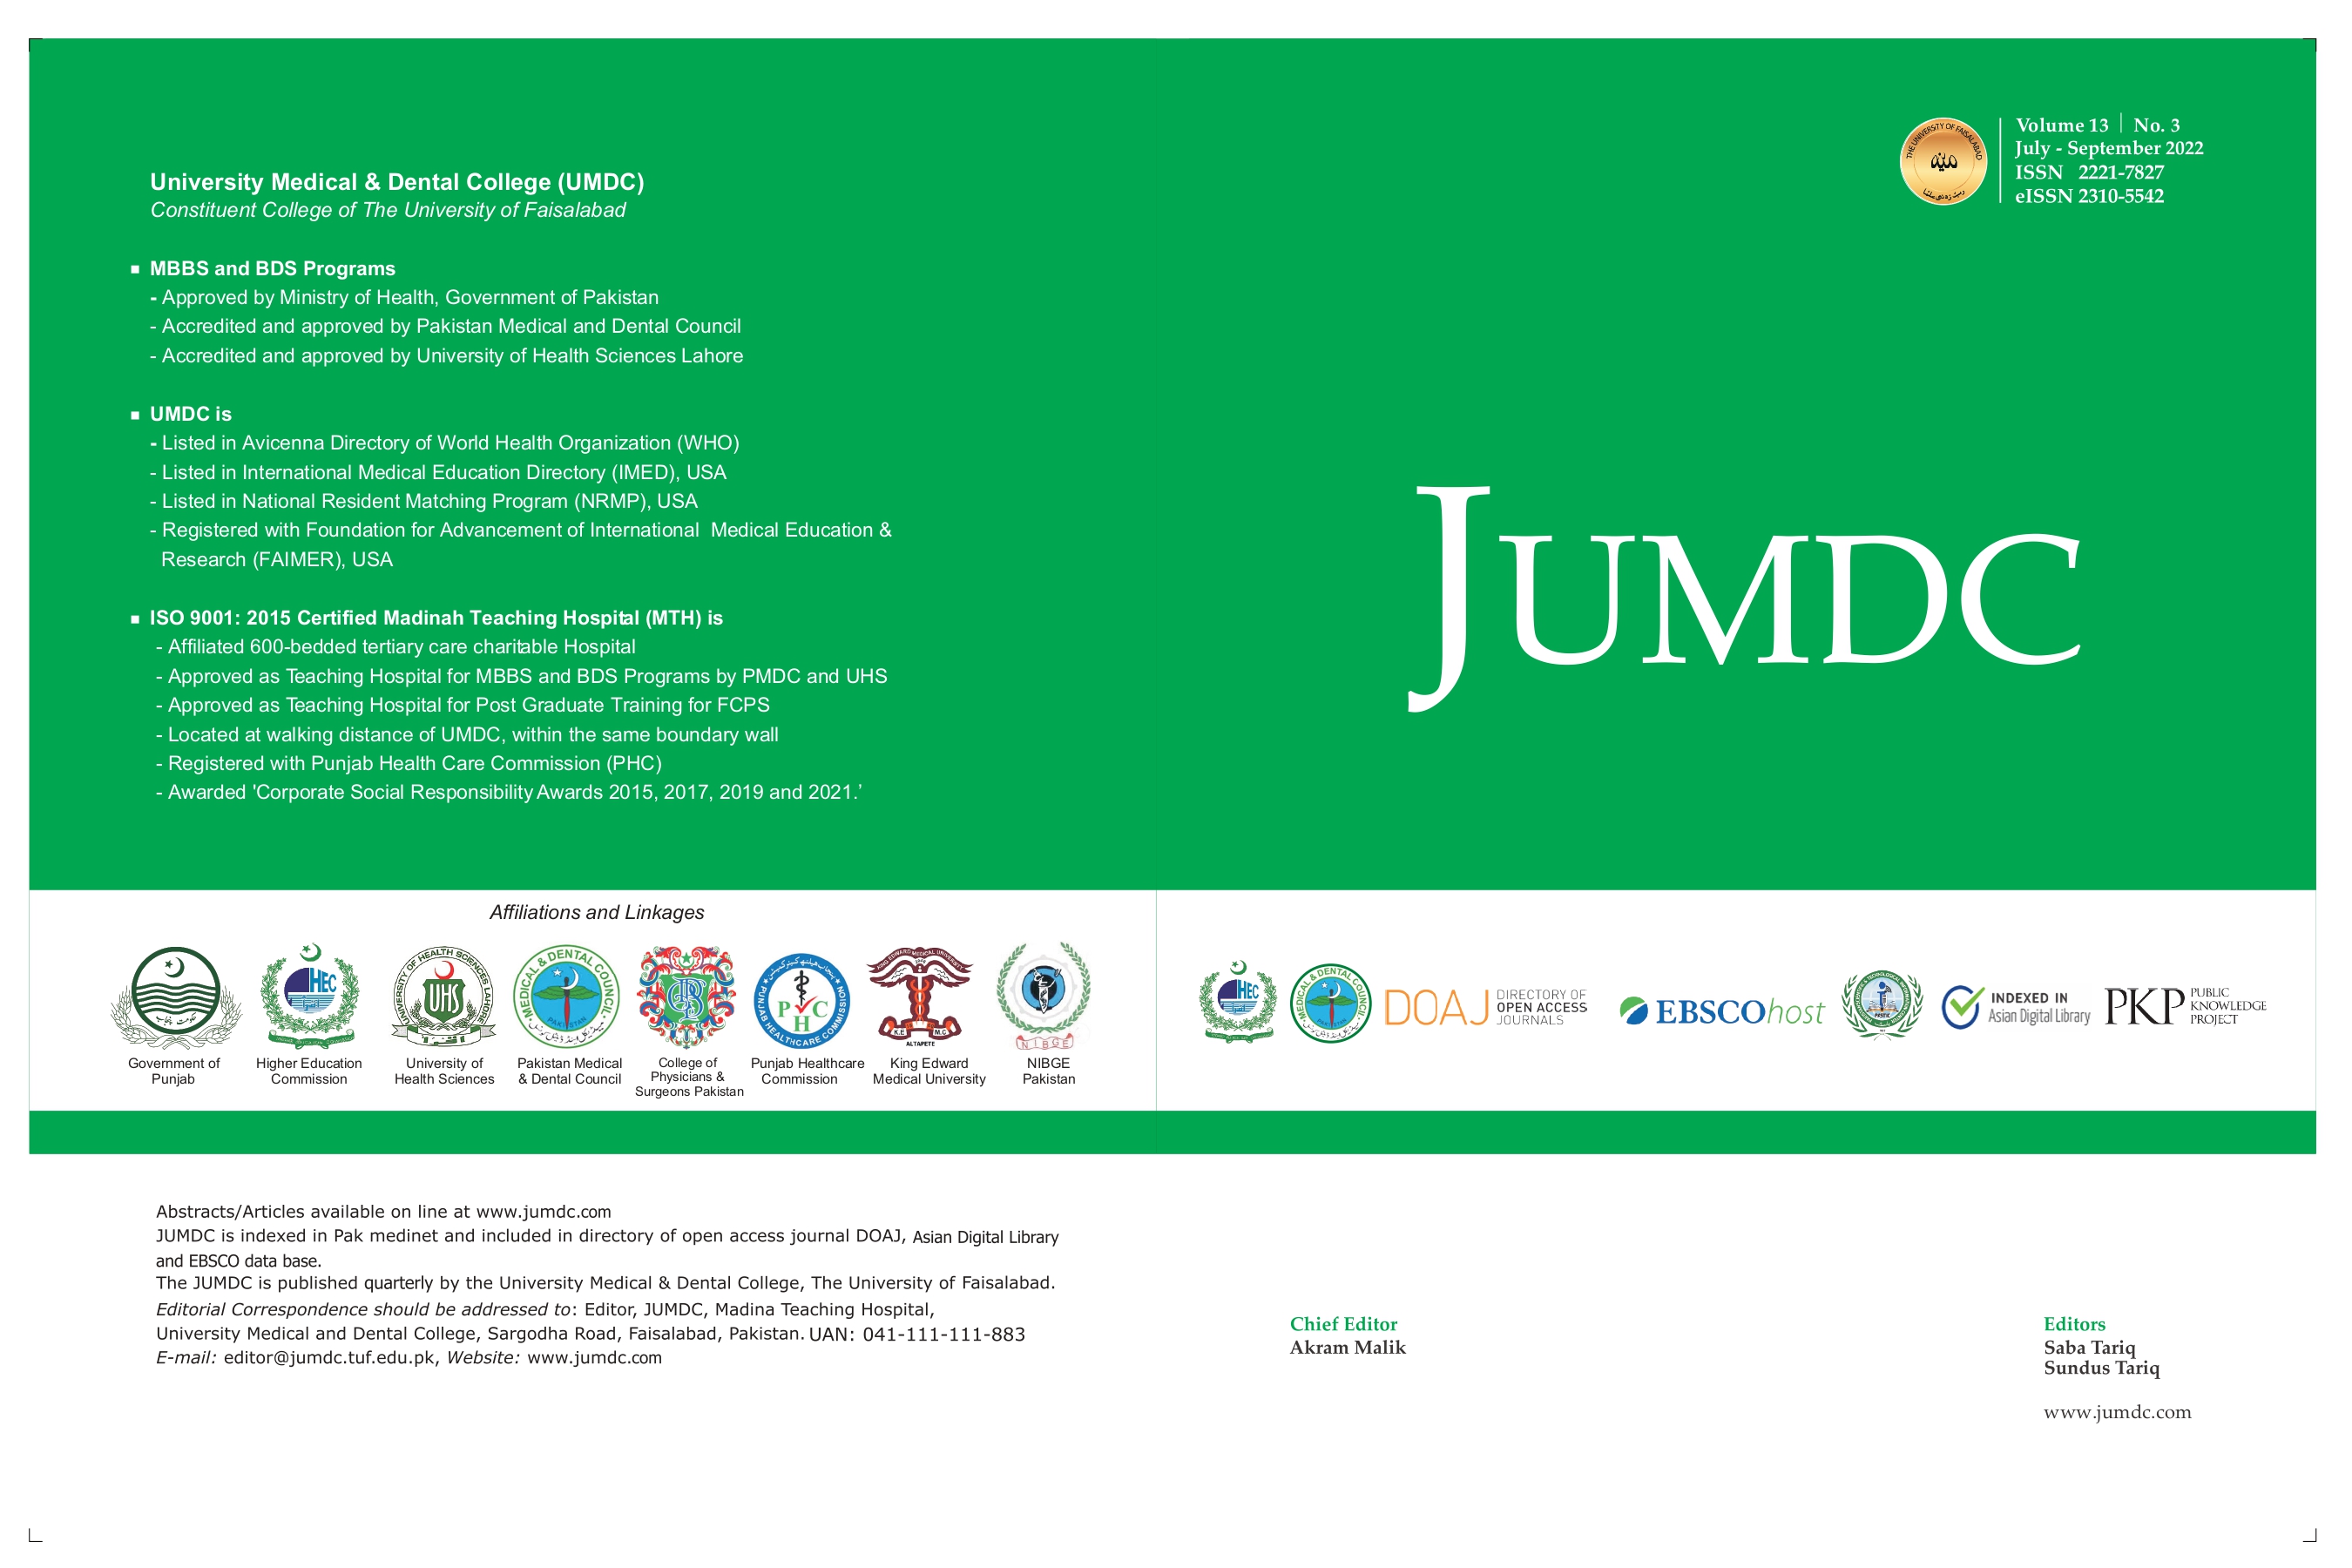 Title_JUMDC_Vol_13_issue_3_pdf_page-0001.jpg